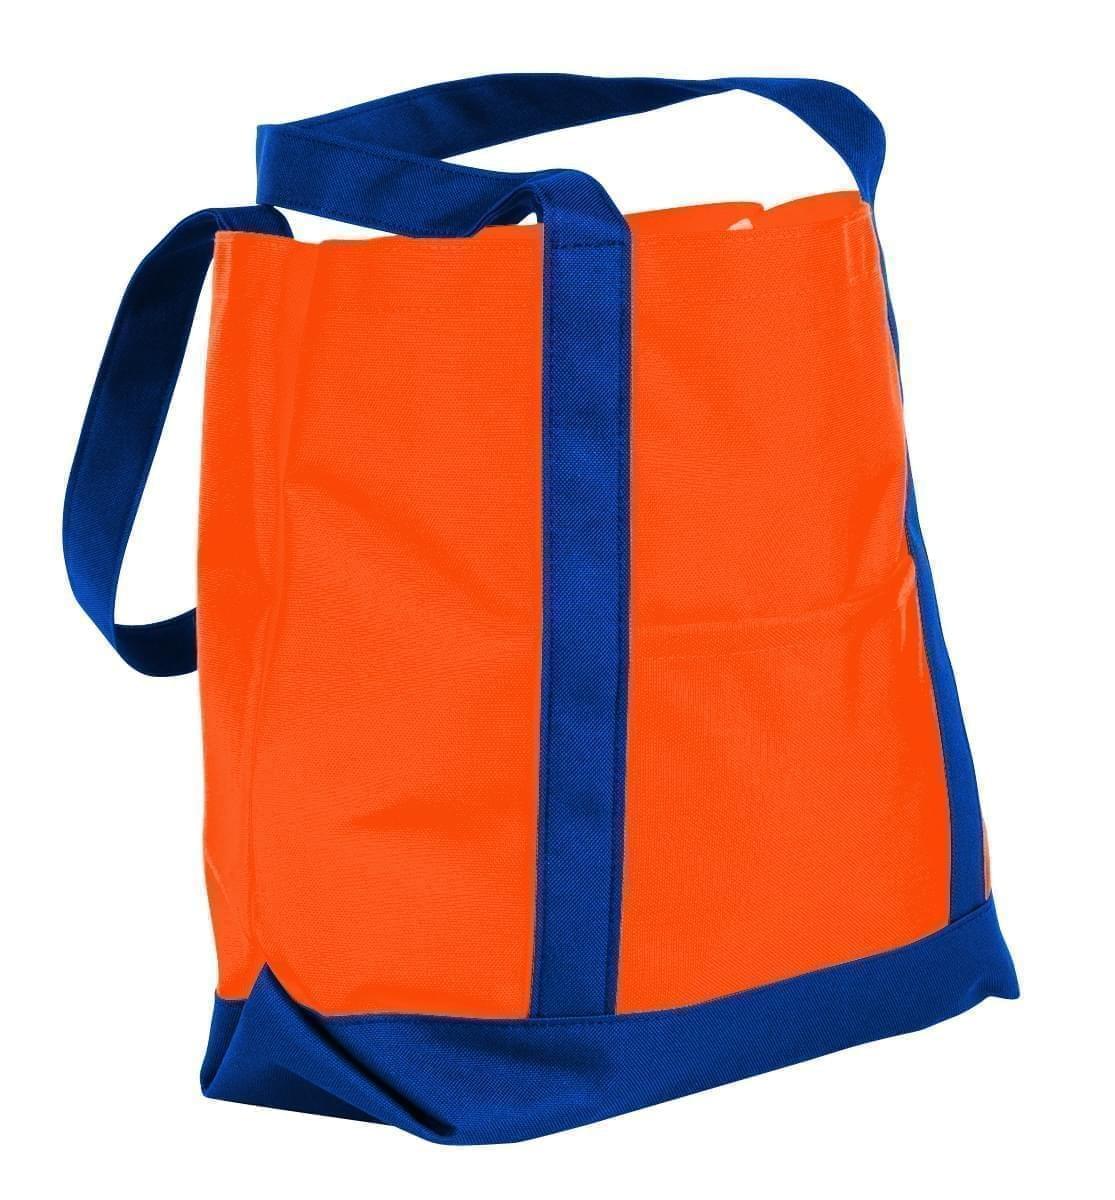 USA Made Nylon Poly Boat Tote Bags, Orange-Royal Blue, XAACL1UAXM